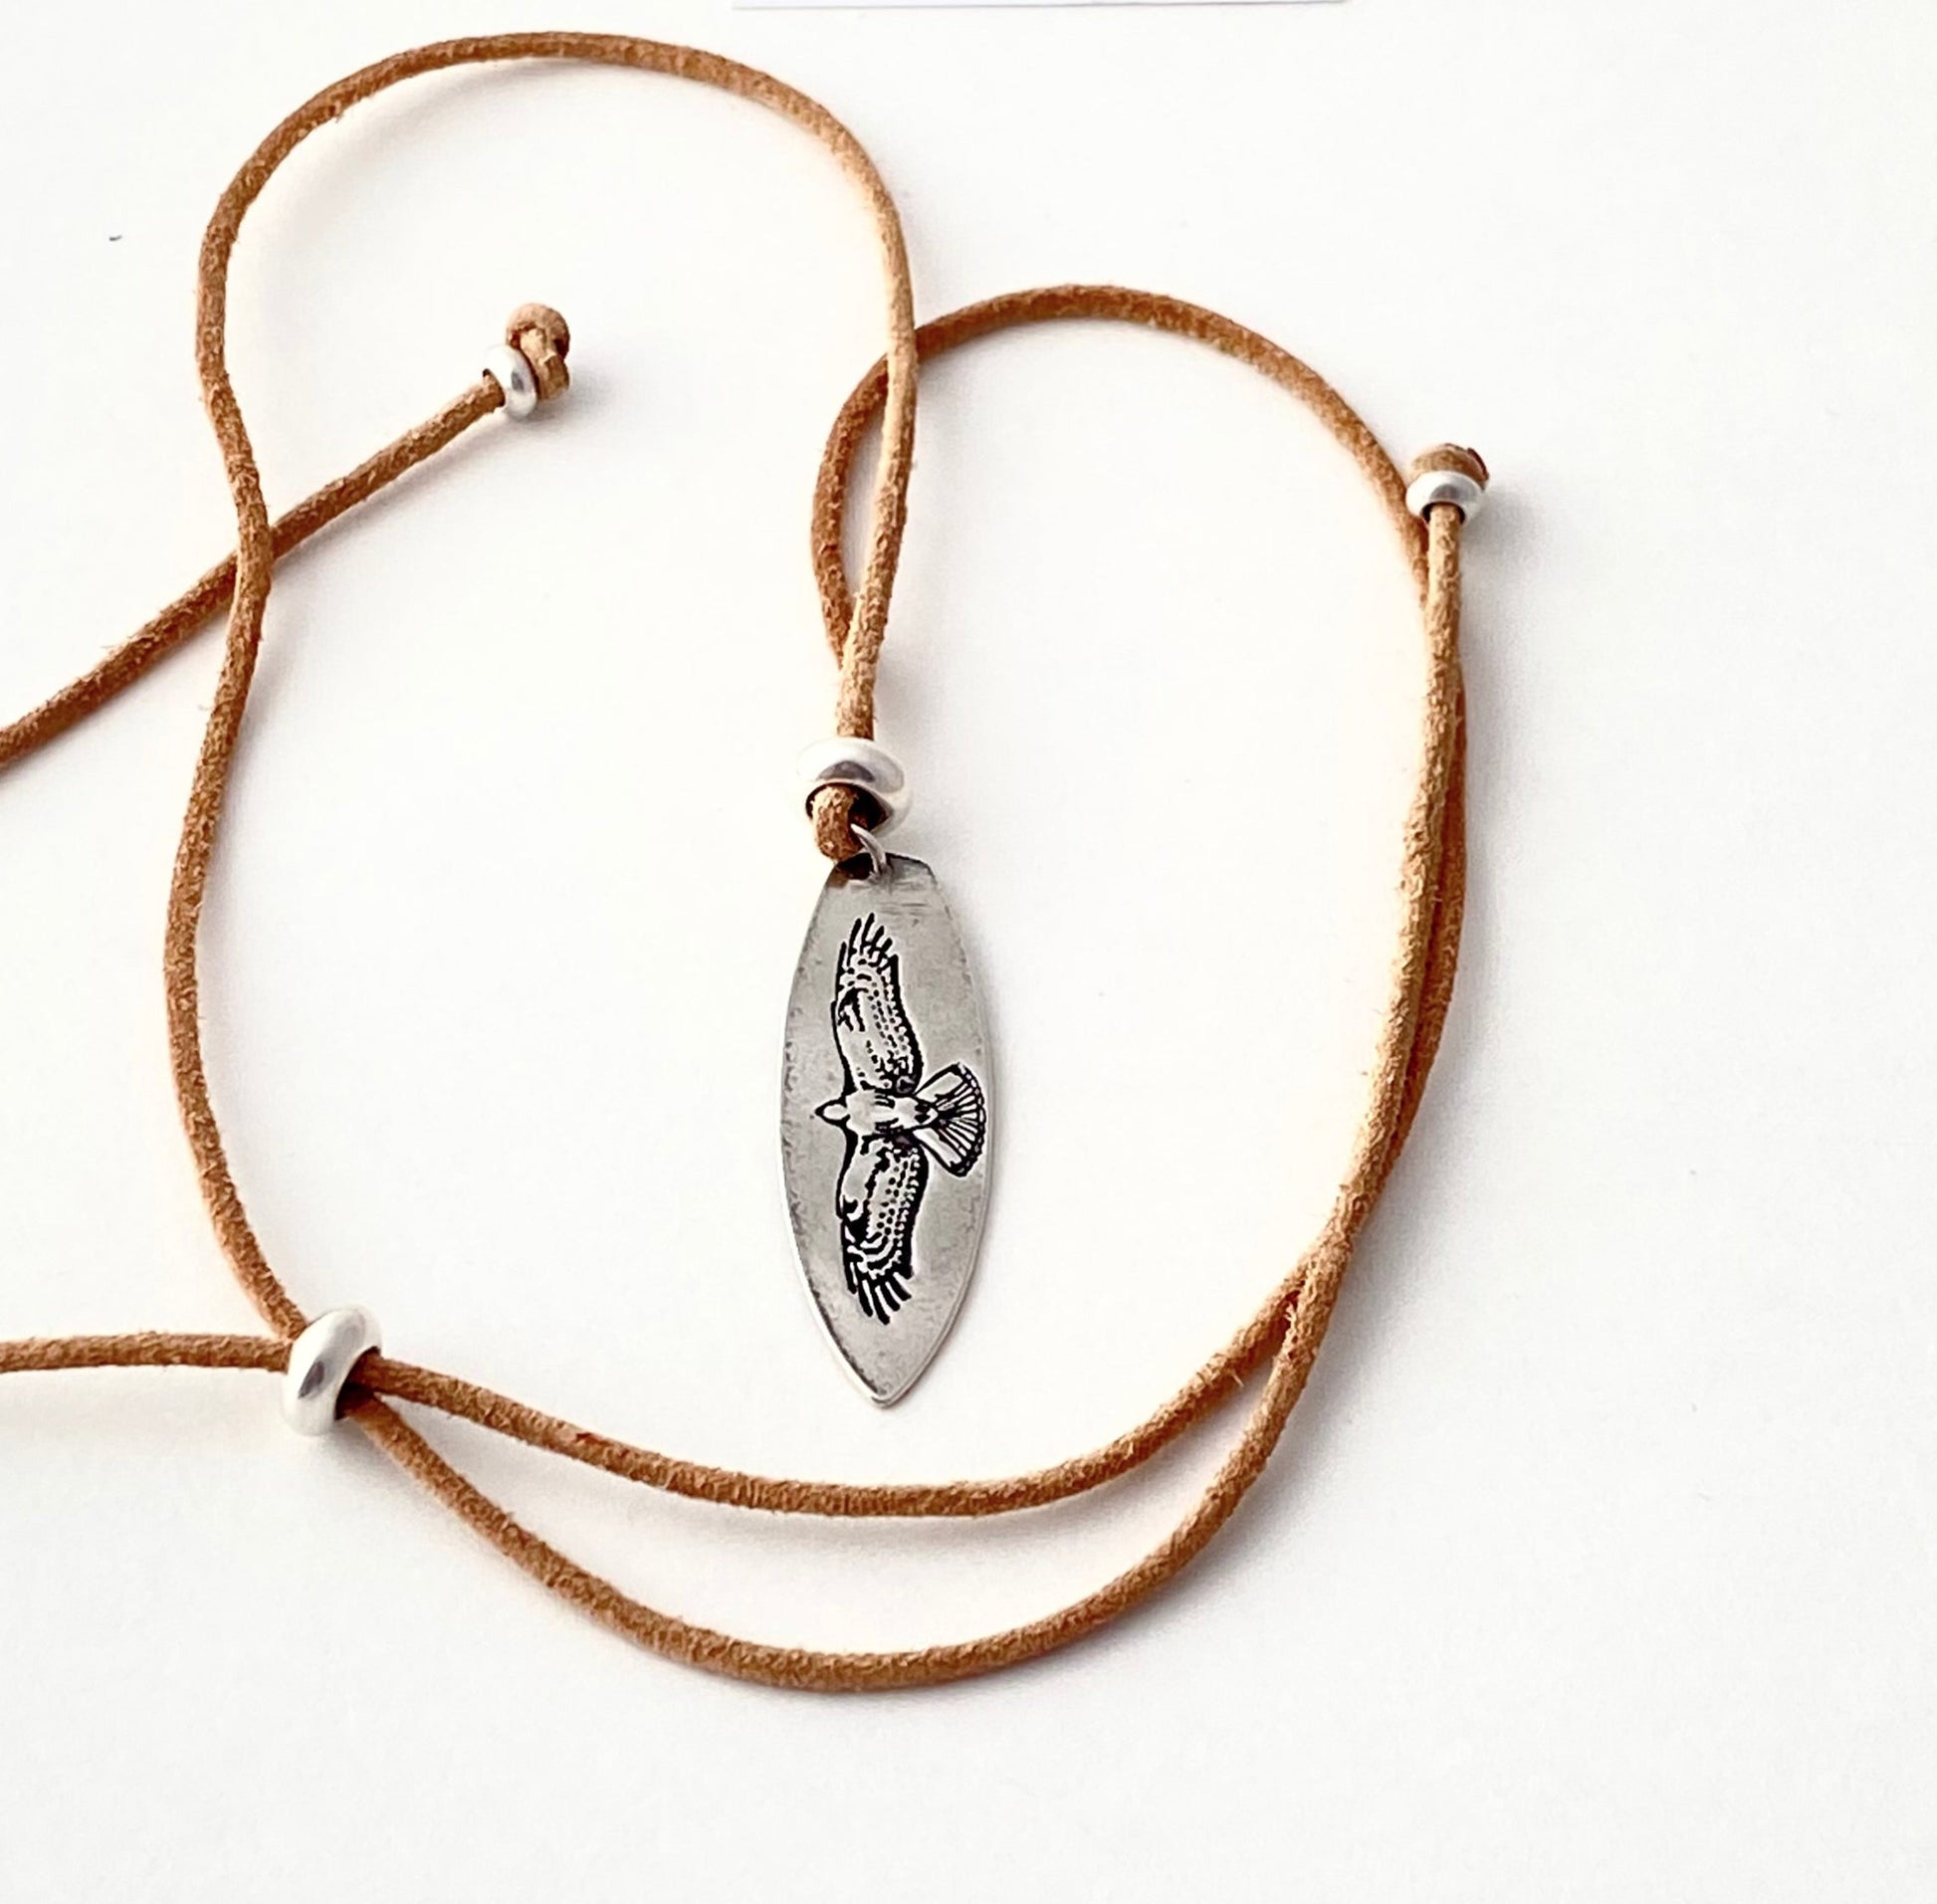 fine silver pendant with soaring hawk design. surf board shape pendant. leather adjustable cord